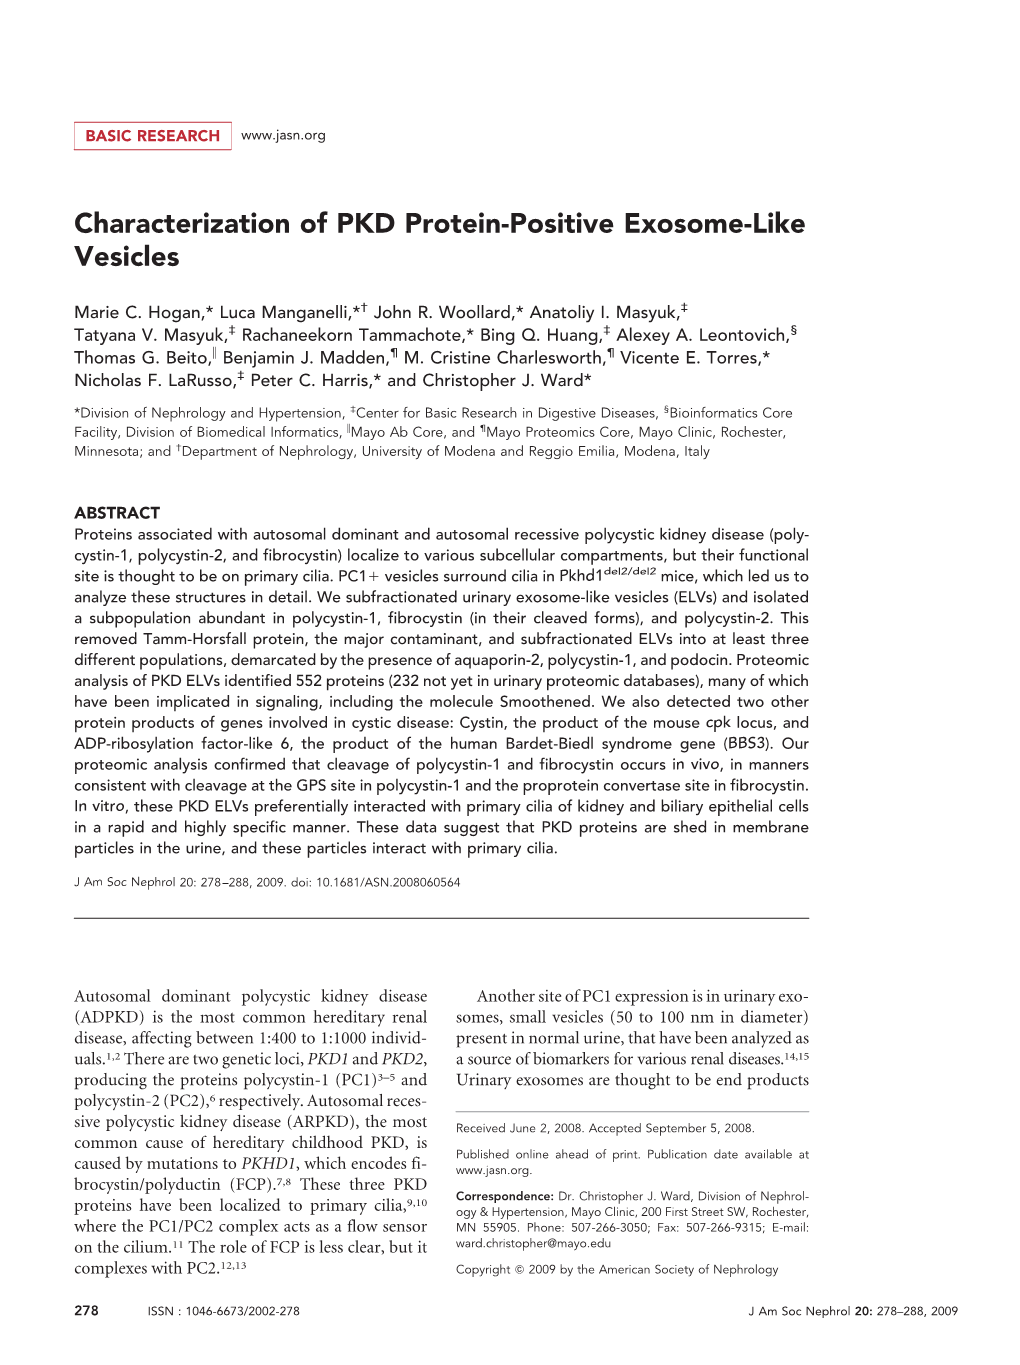 Characterization of PKD Protein-Positive Exosome-Like Vesicles